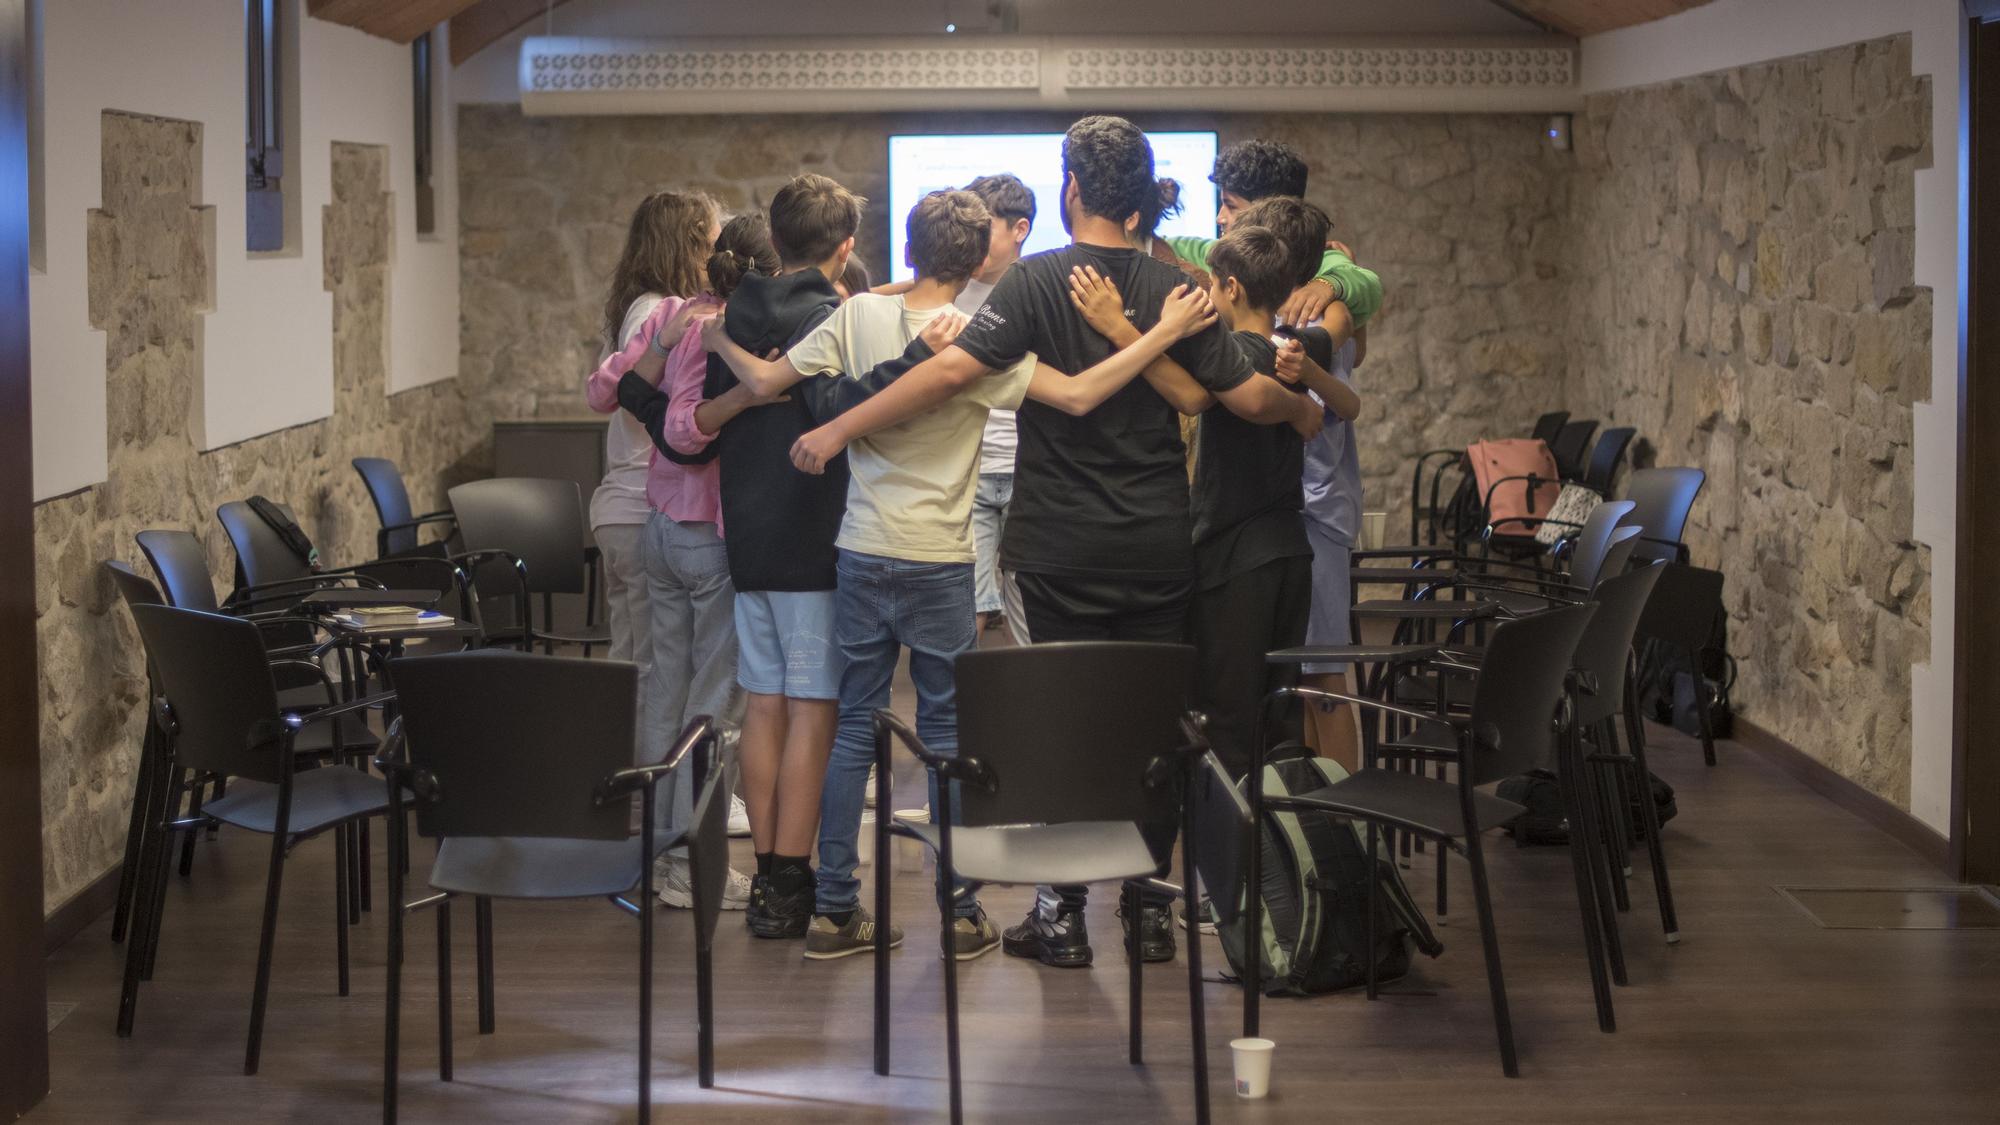 El grupo de menores se abraza al finalizar el taller donde aprenden a gestionar emocionalmente el duelo dentro del programa de Atenció Integral a Personas amb Malalties Avançades de la Fundació La Caixa